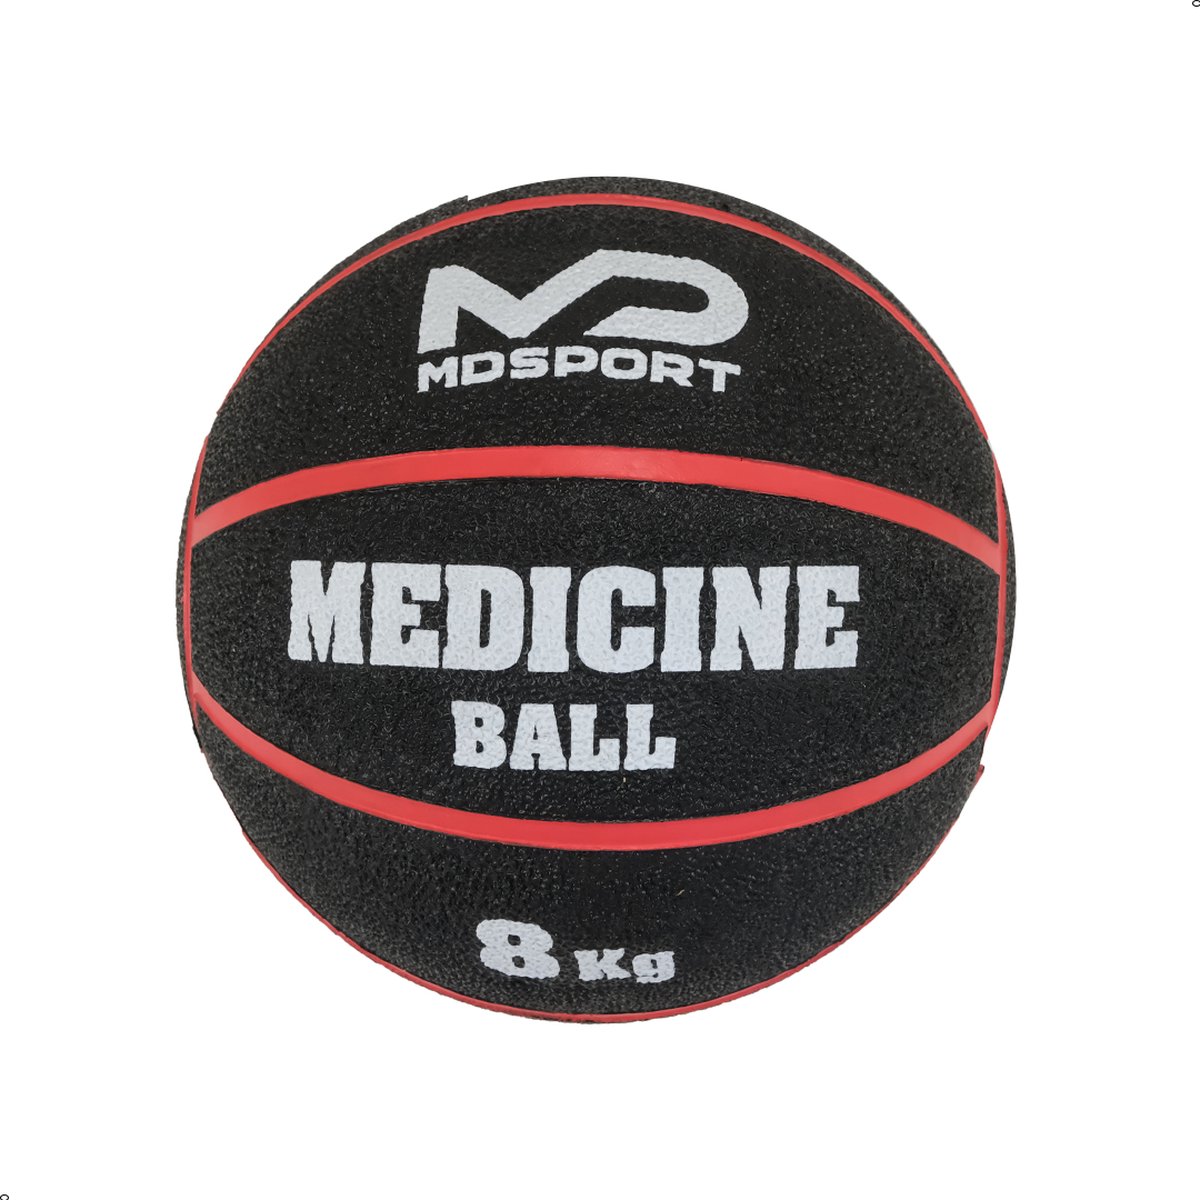 MDsport - Medicijnbal 8KG - Medicinebal 8KG - Rubber - Top kwaliteit - Zwart/Rood